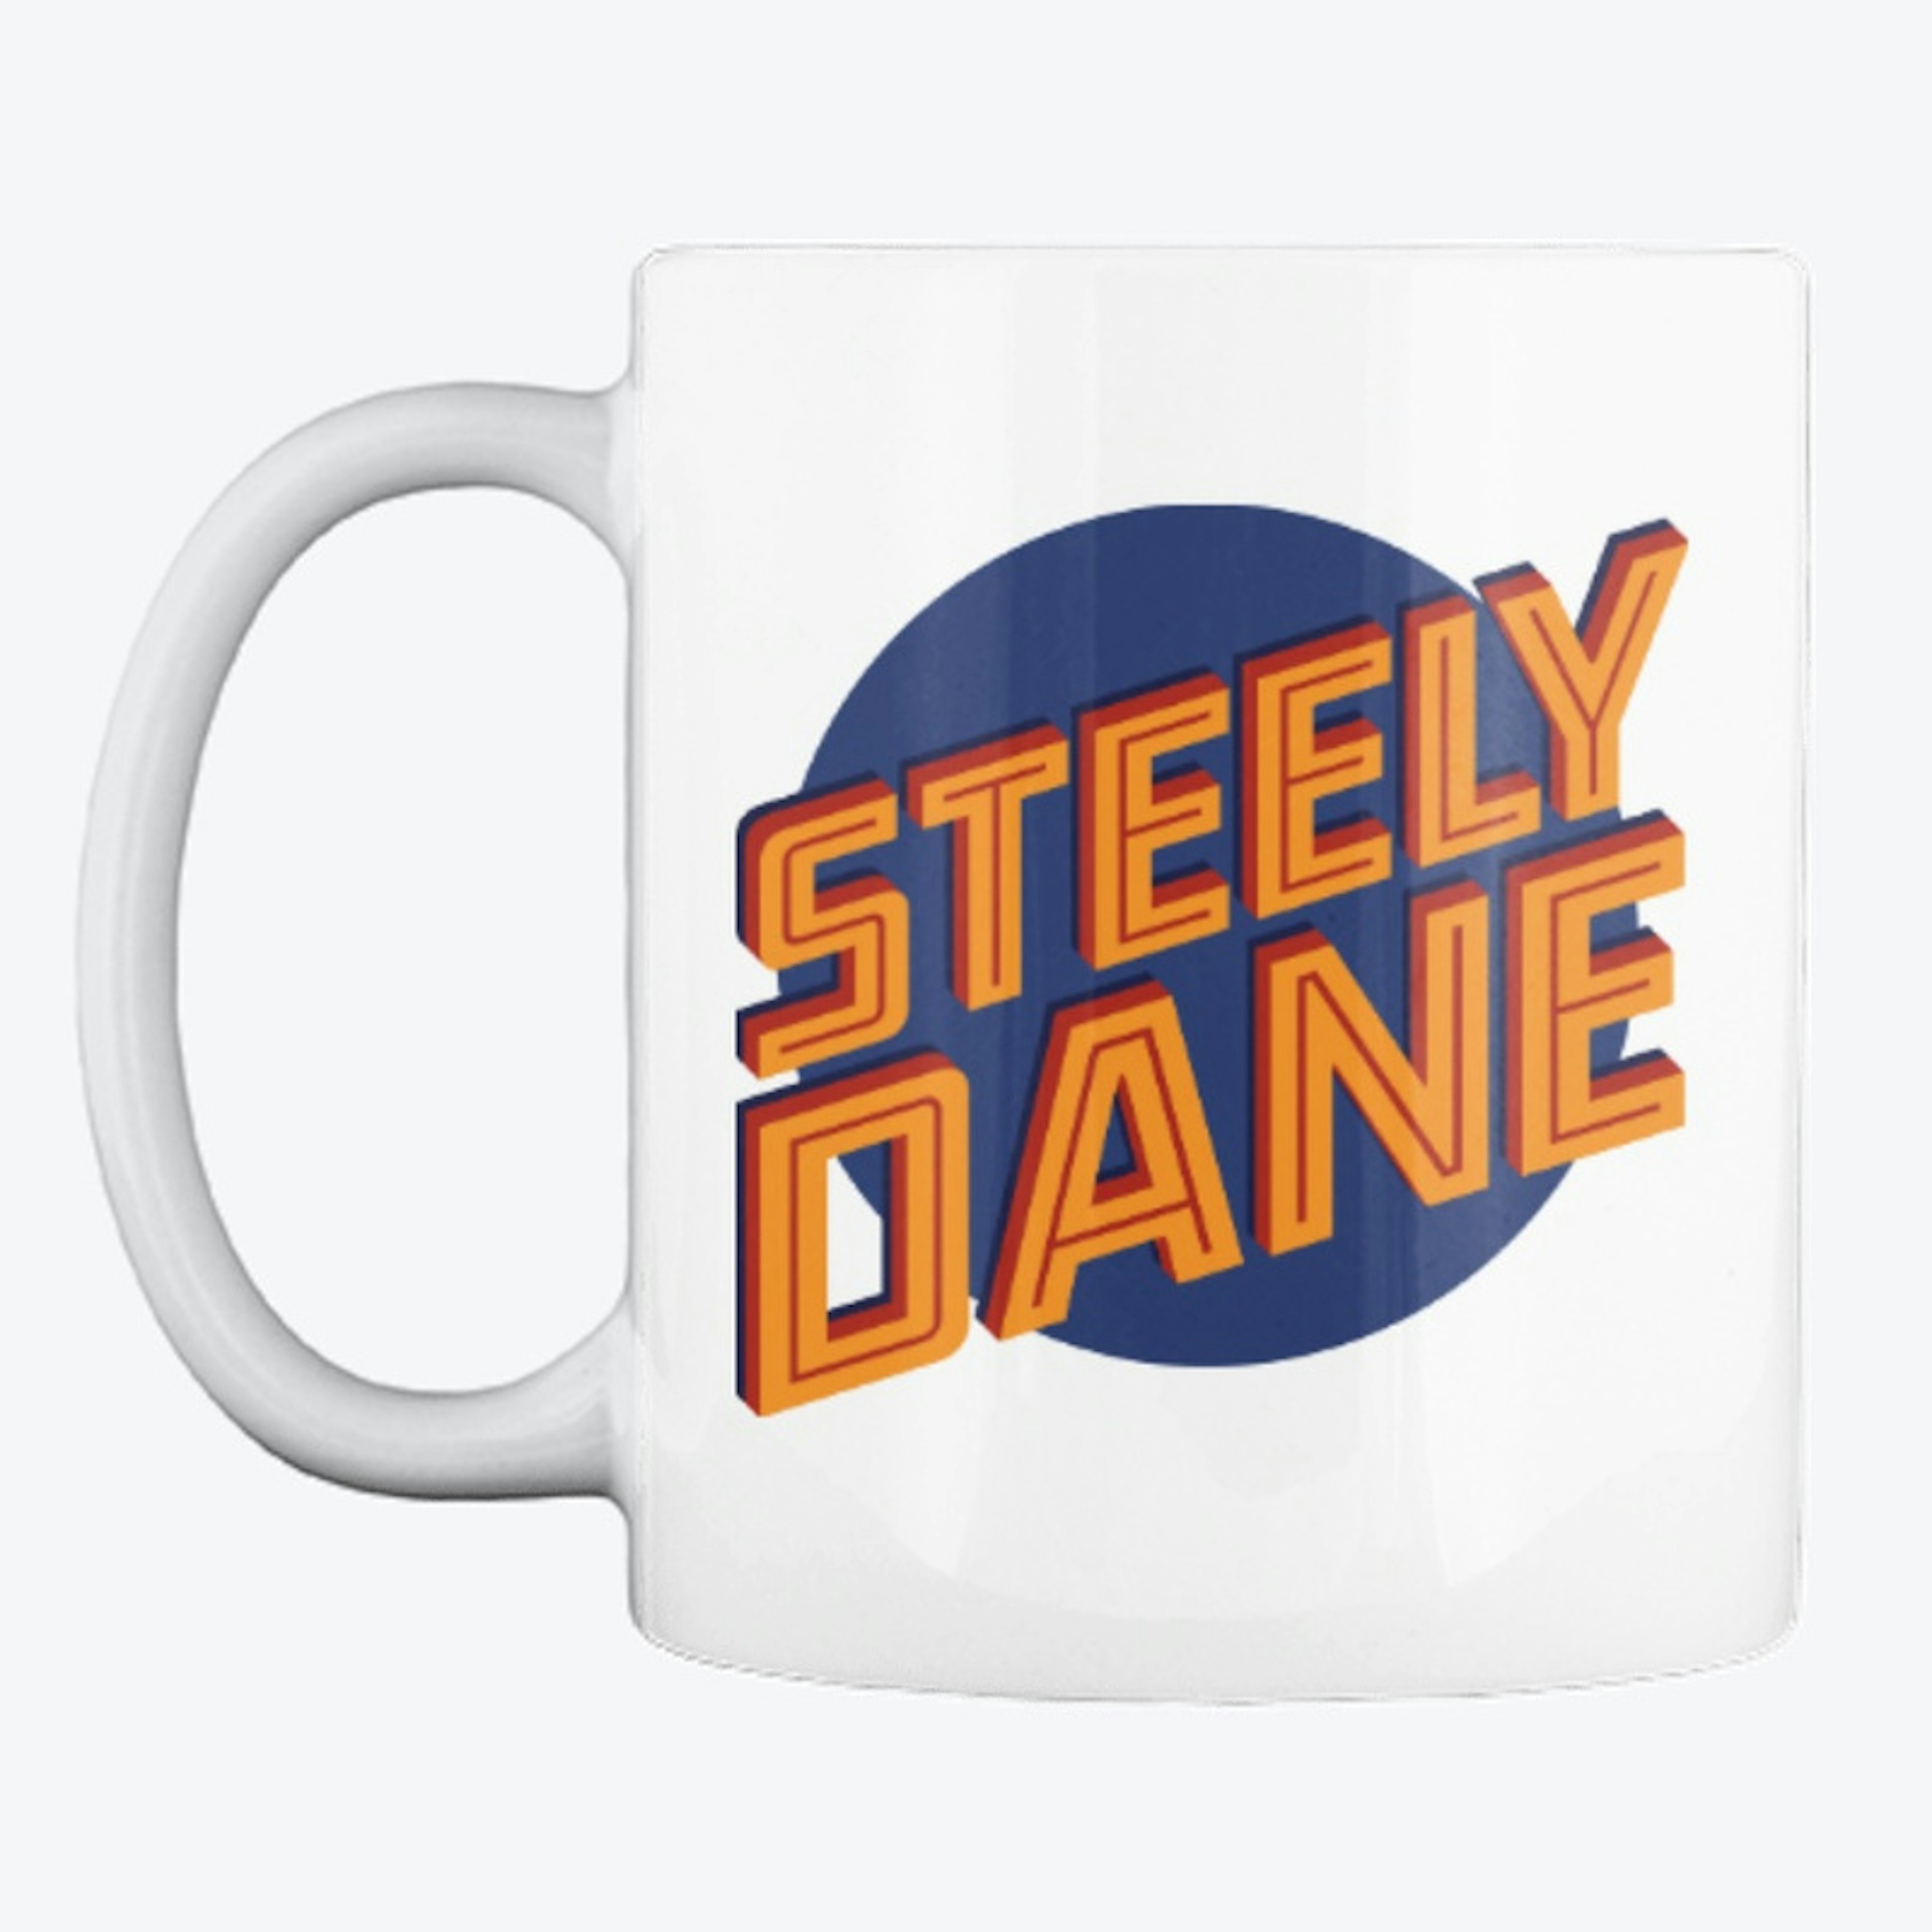 Steely Dane Coffee Mug